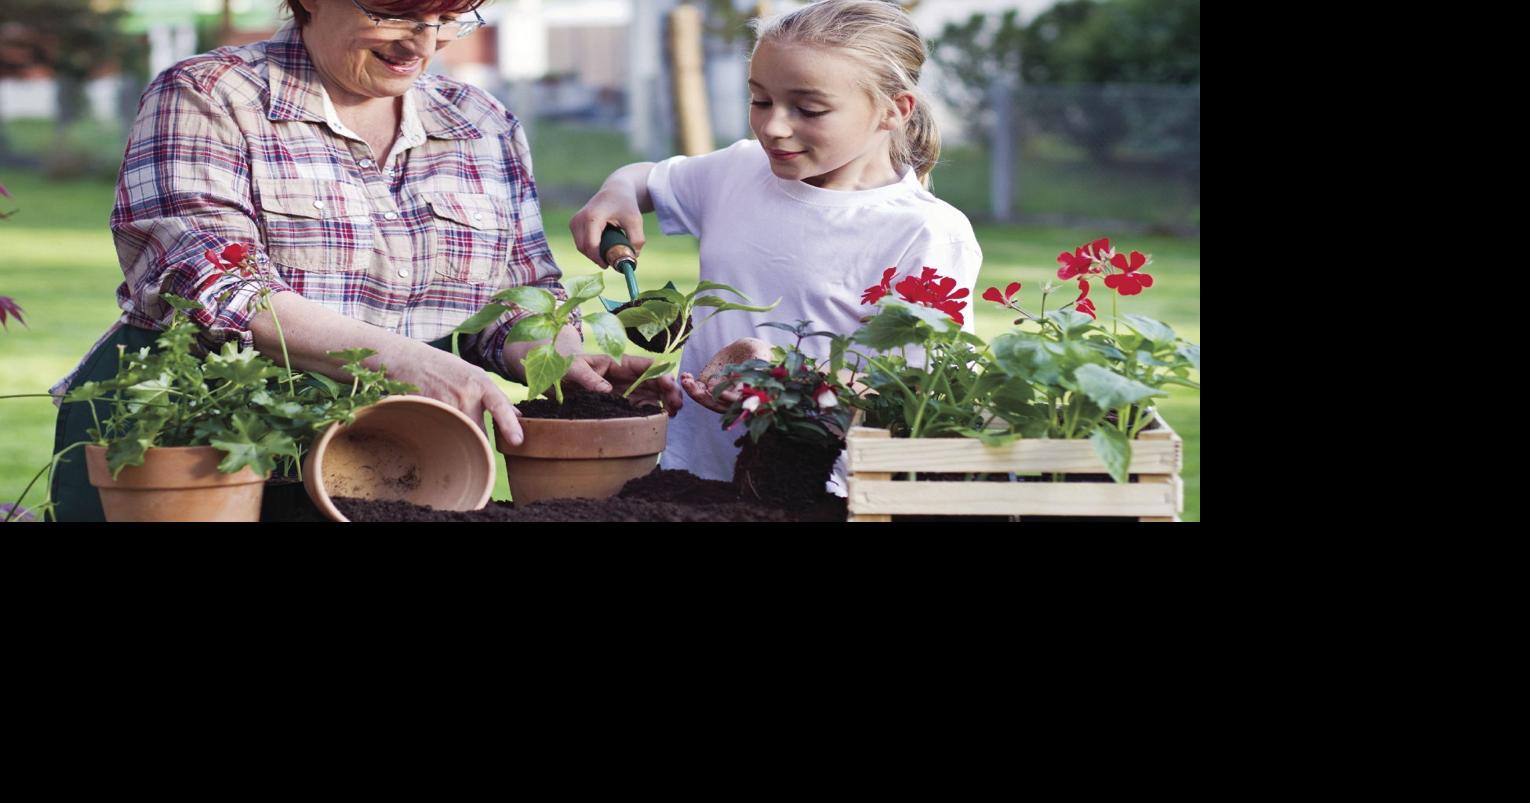 EYESTONE | Exploring the ‘us factor’ in garden health | Features